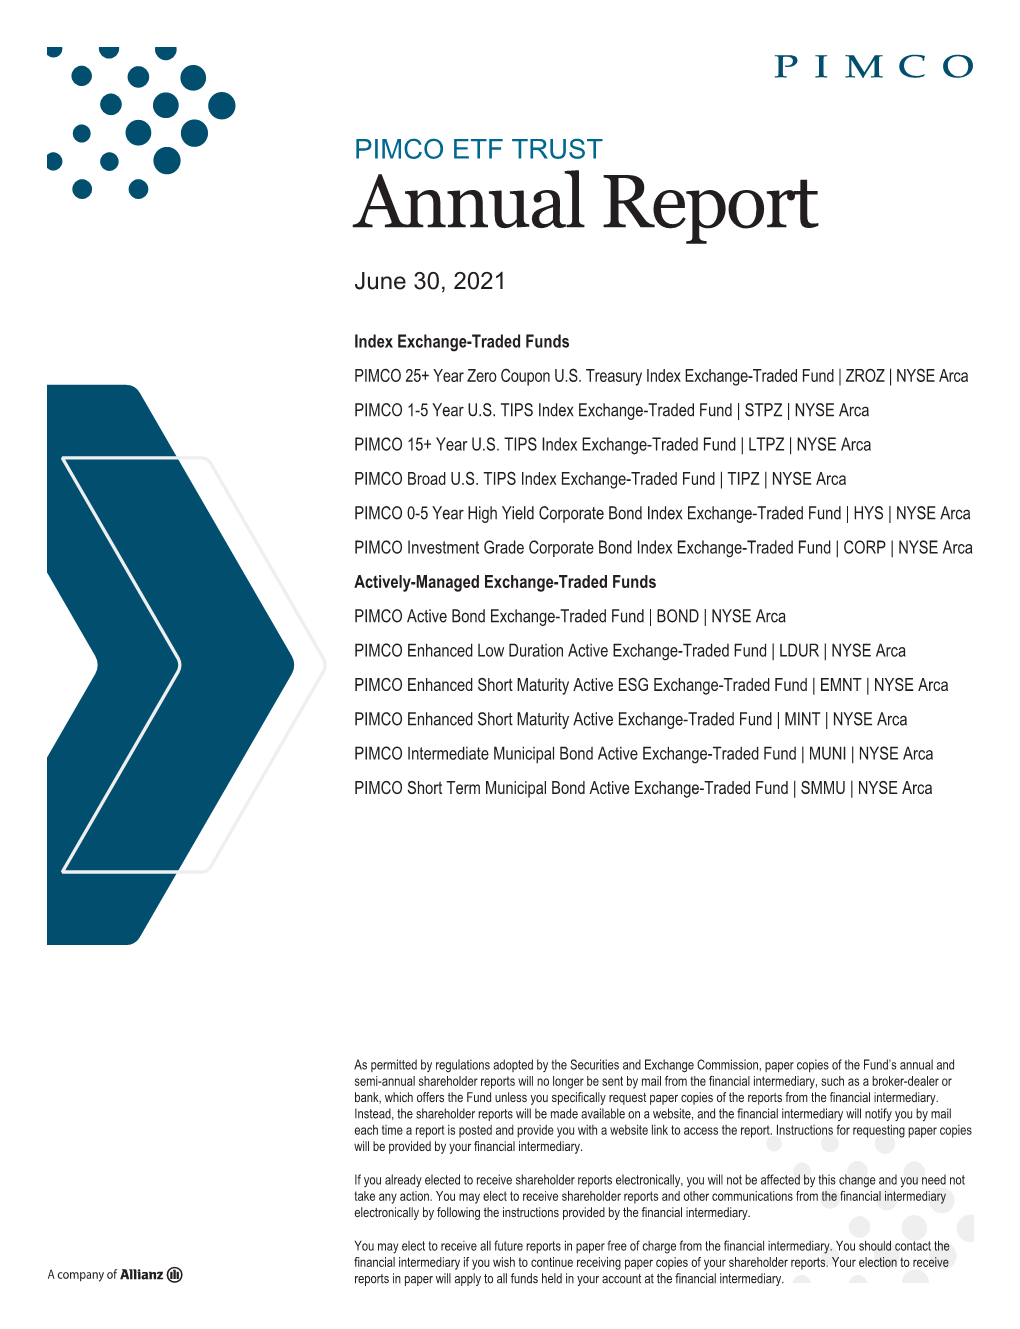 PIMCO ETF TRUST Annual Report